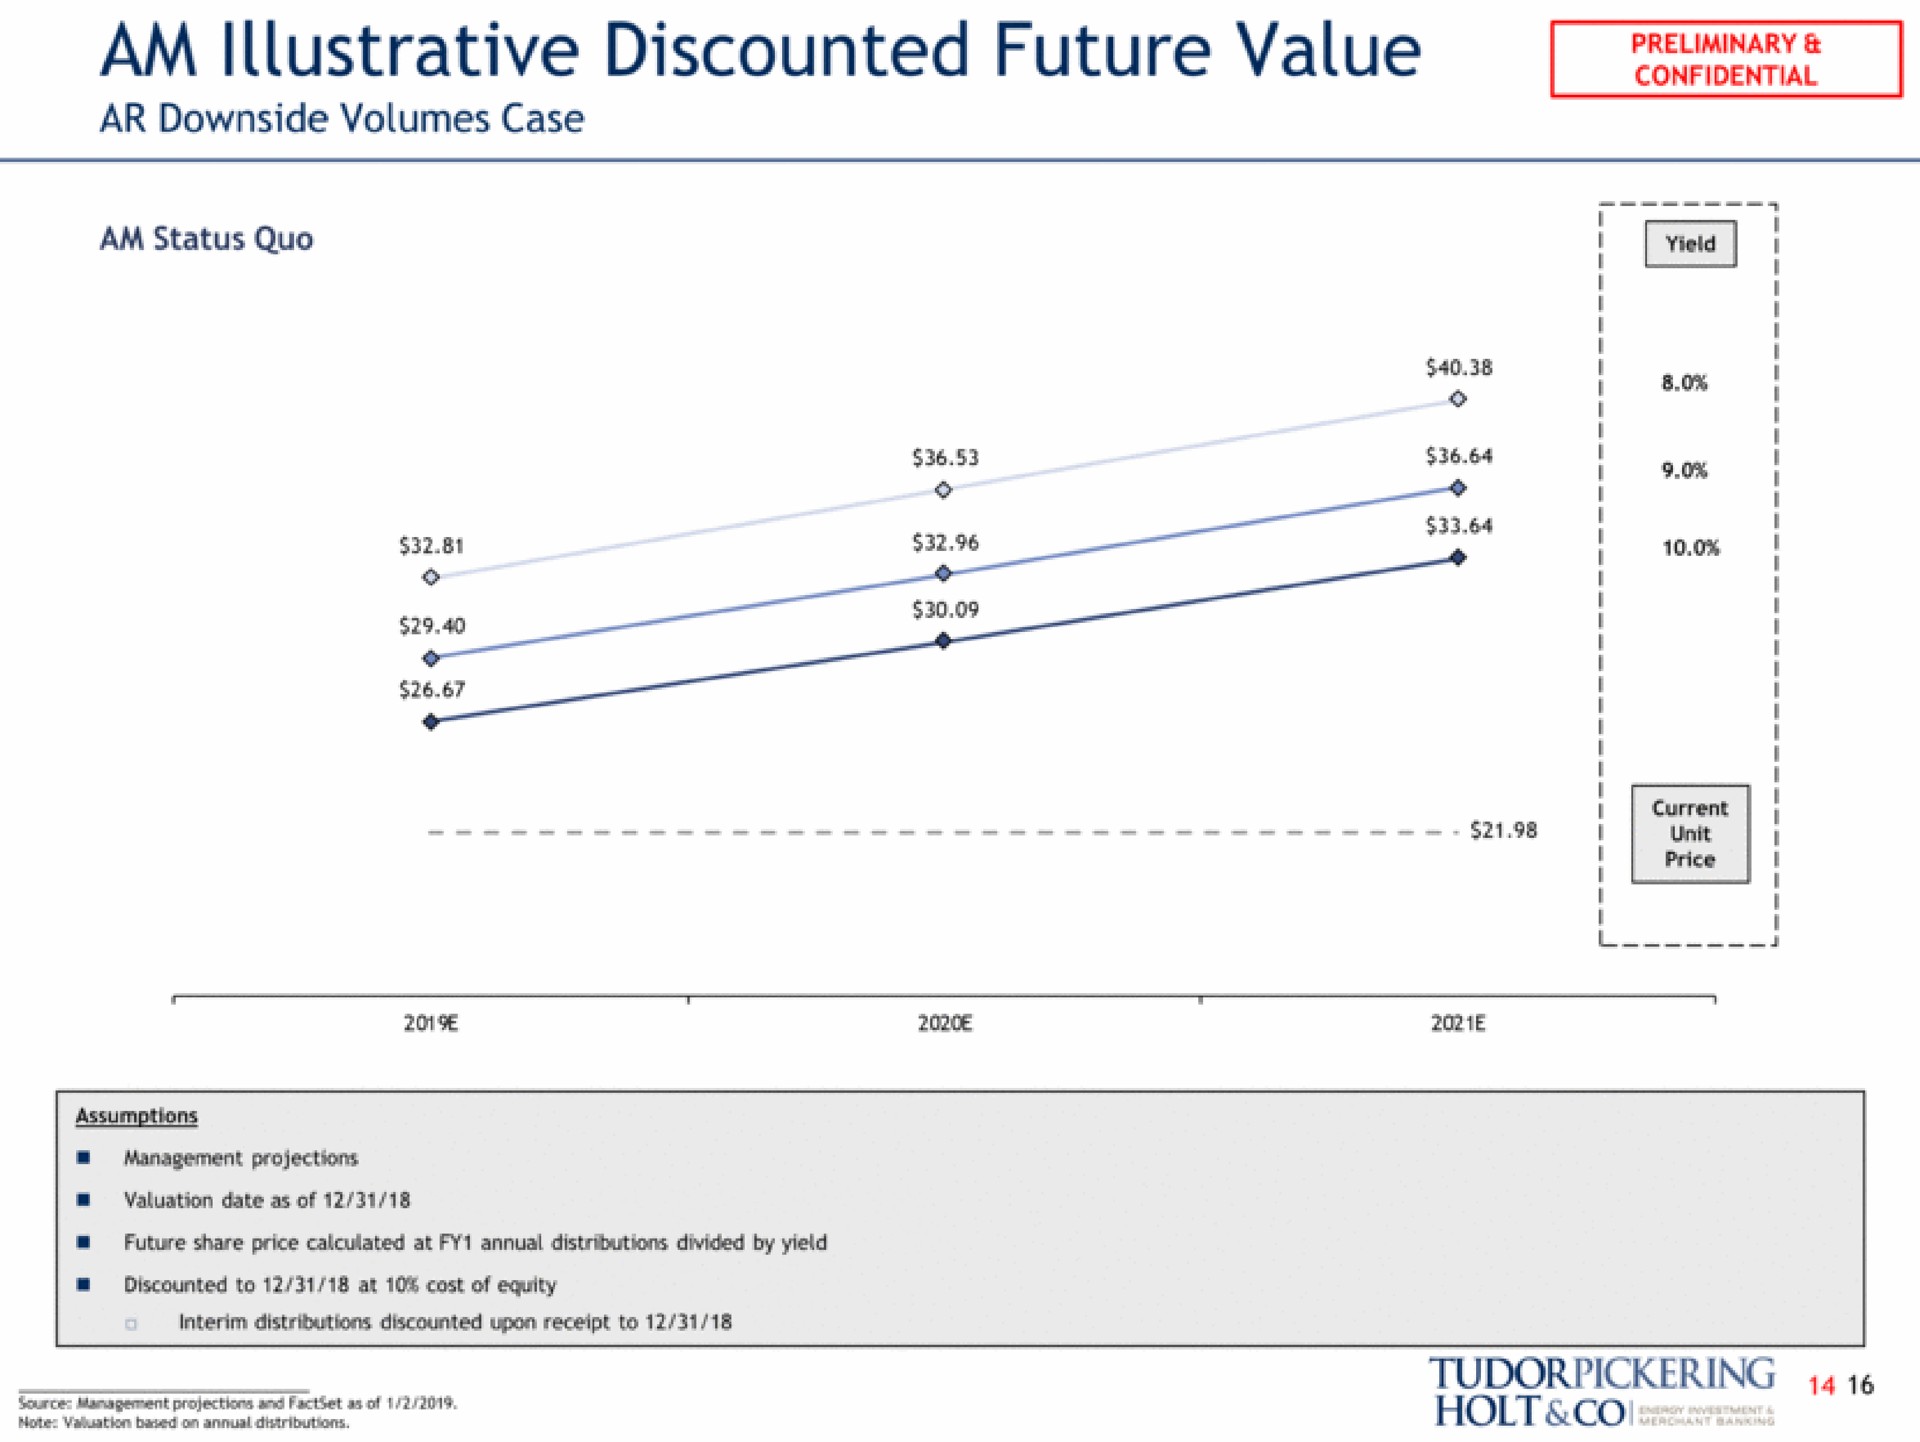 am illustrative discounted future value meta based on holt | Tudor, Pickering, Holt & Co